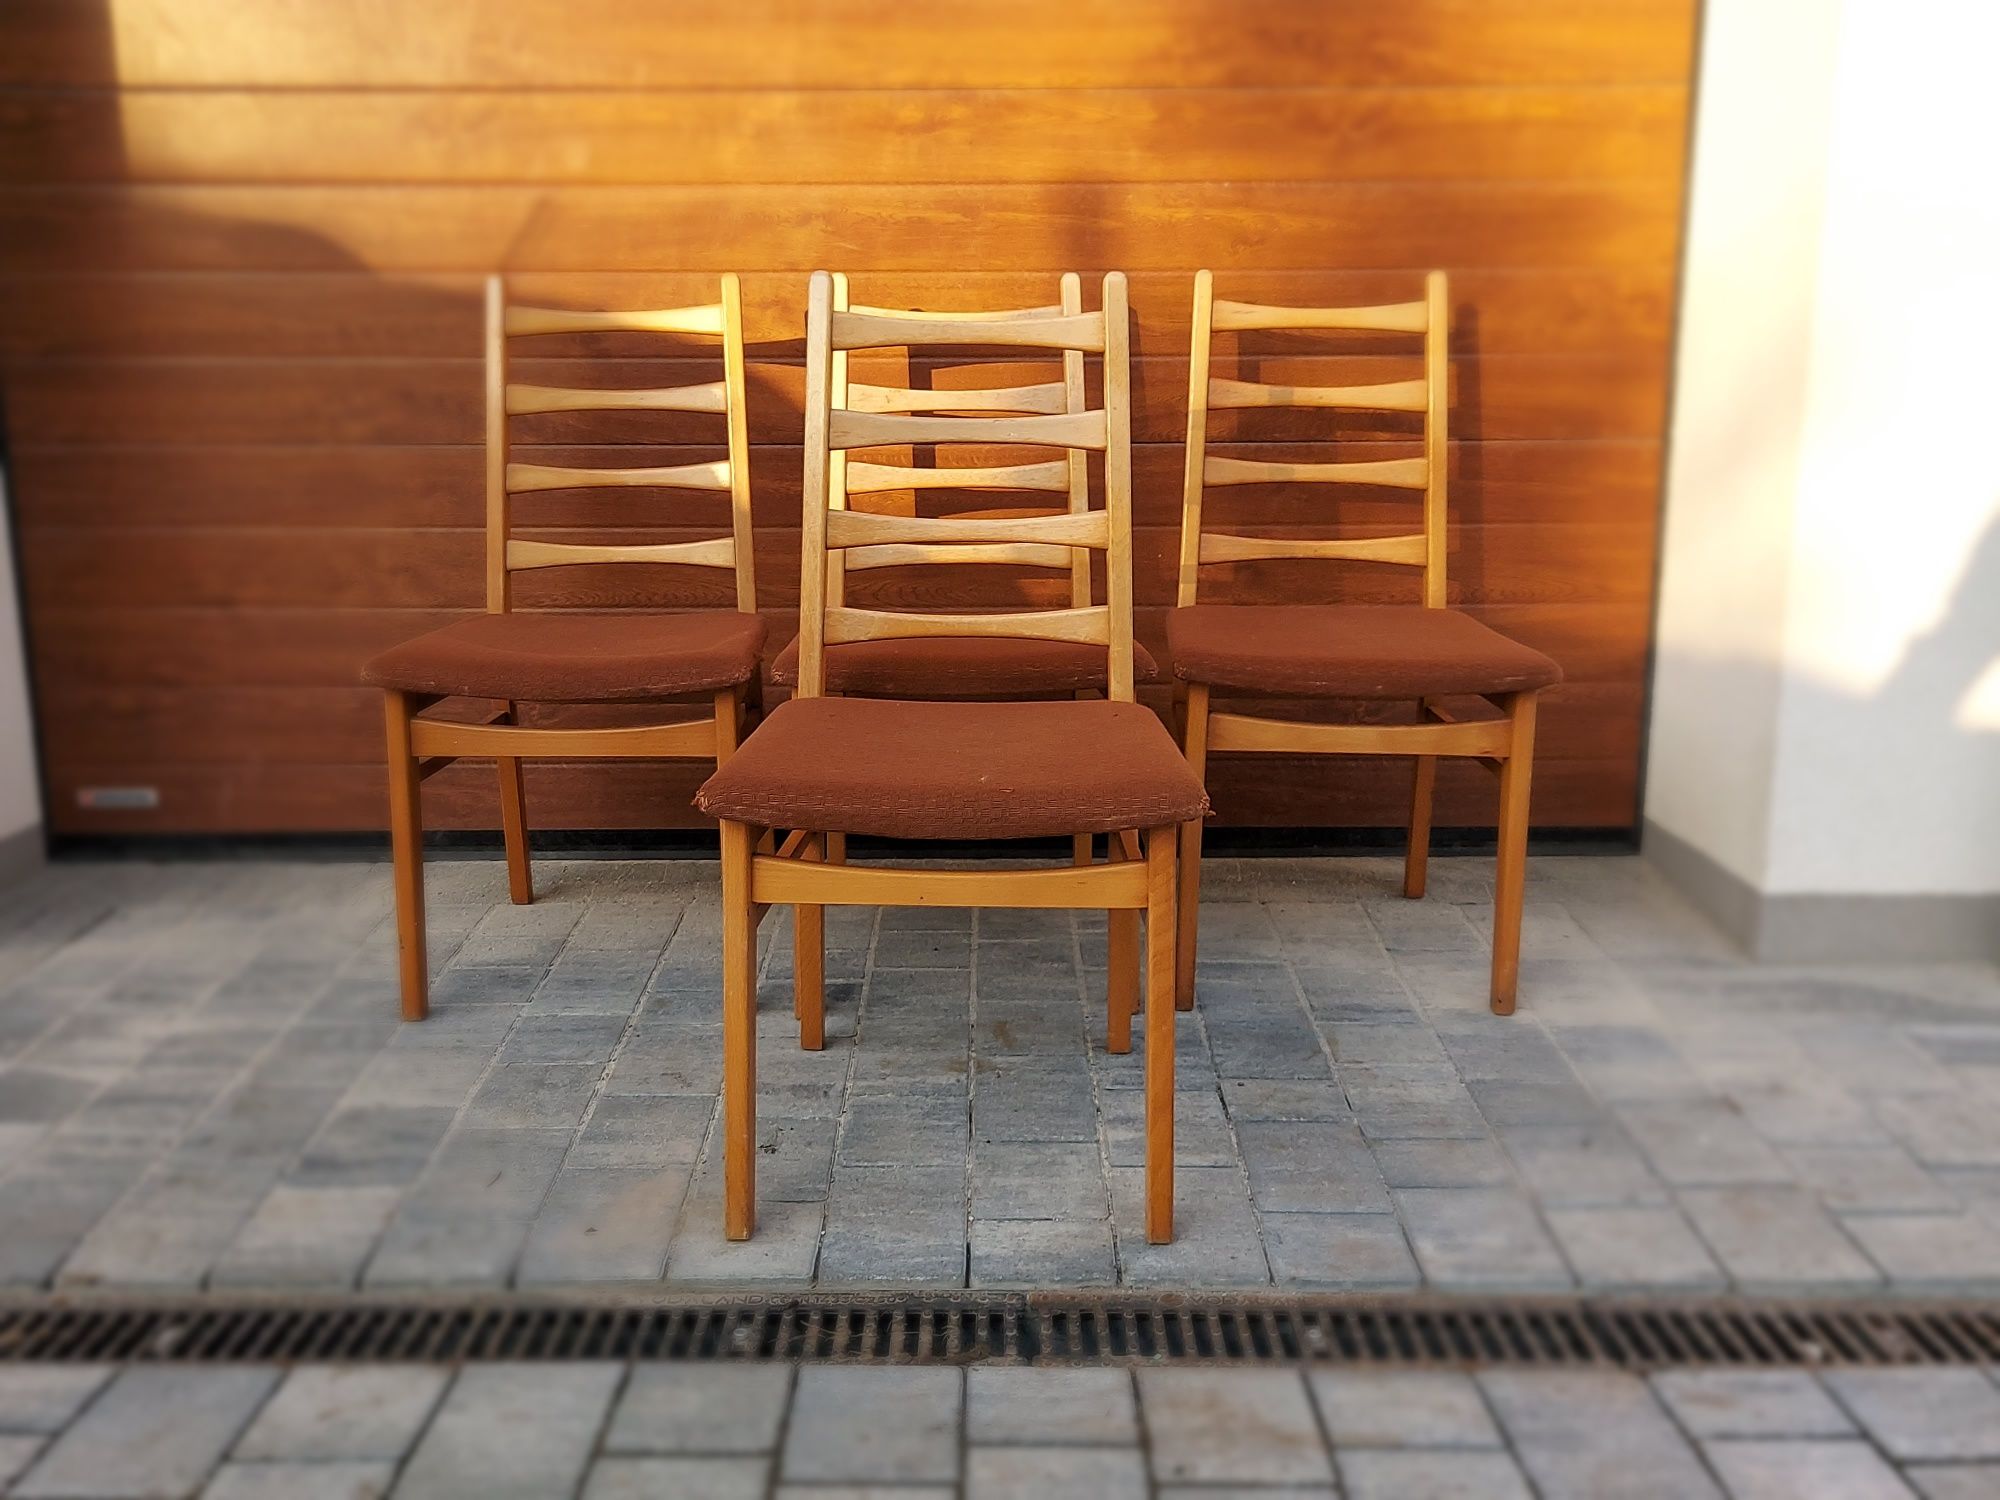 Krzesla Vintage Drewniane do Jadalni Kuchni Lata 70 Design Retro PRL